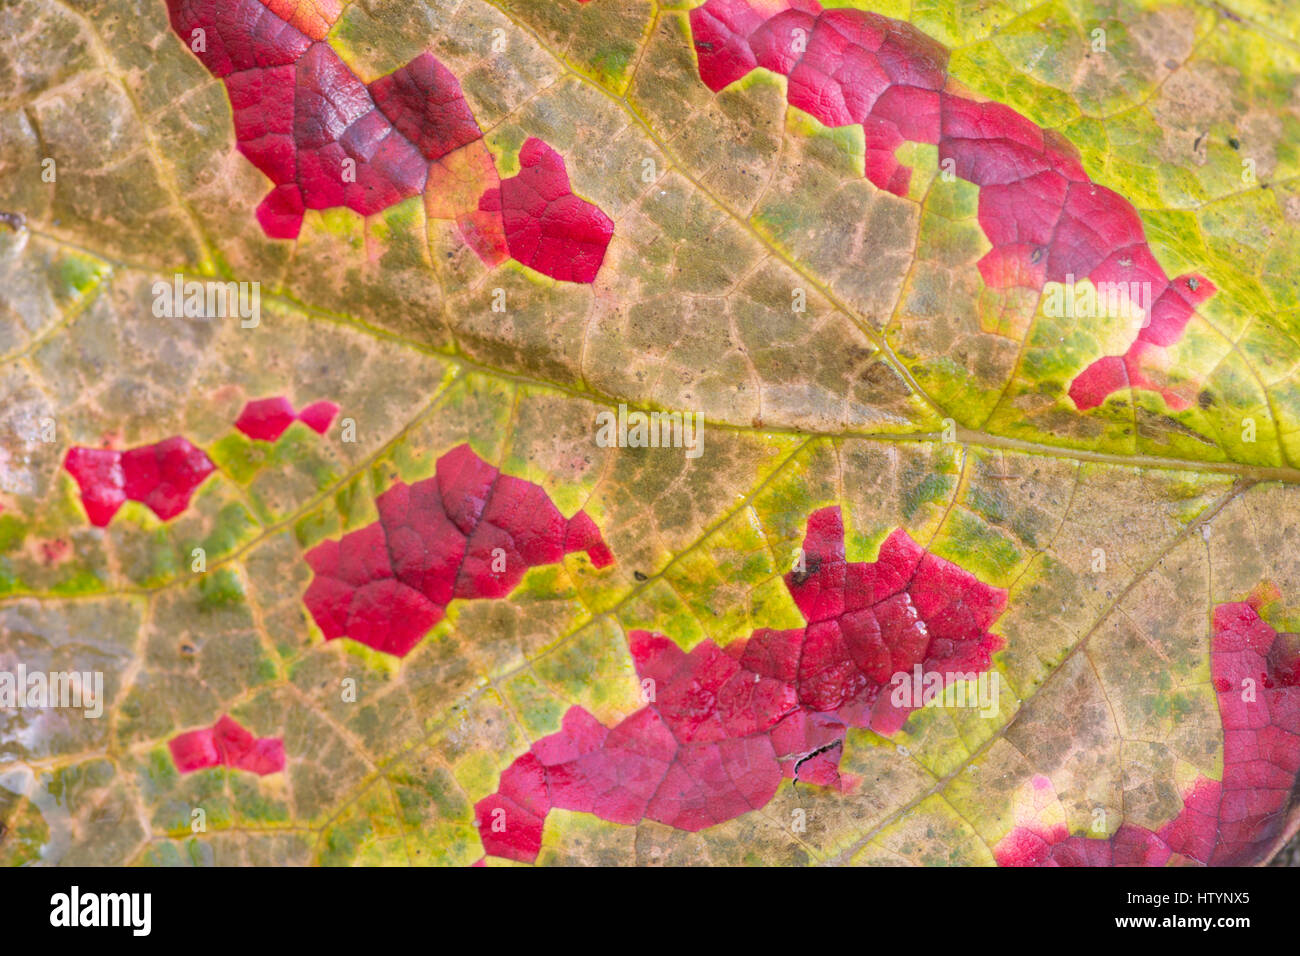 Red spots on vine leaf Stock Photo